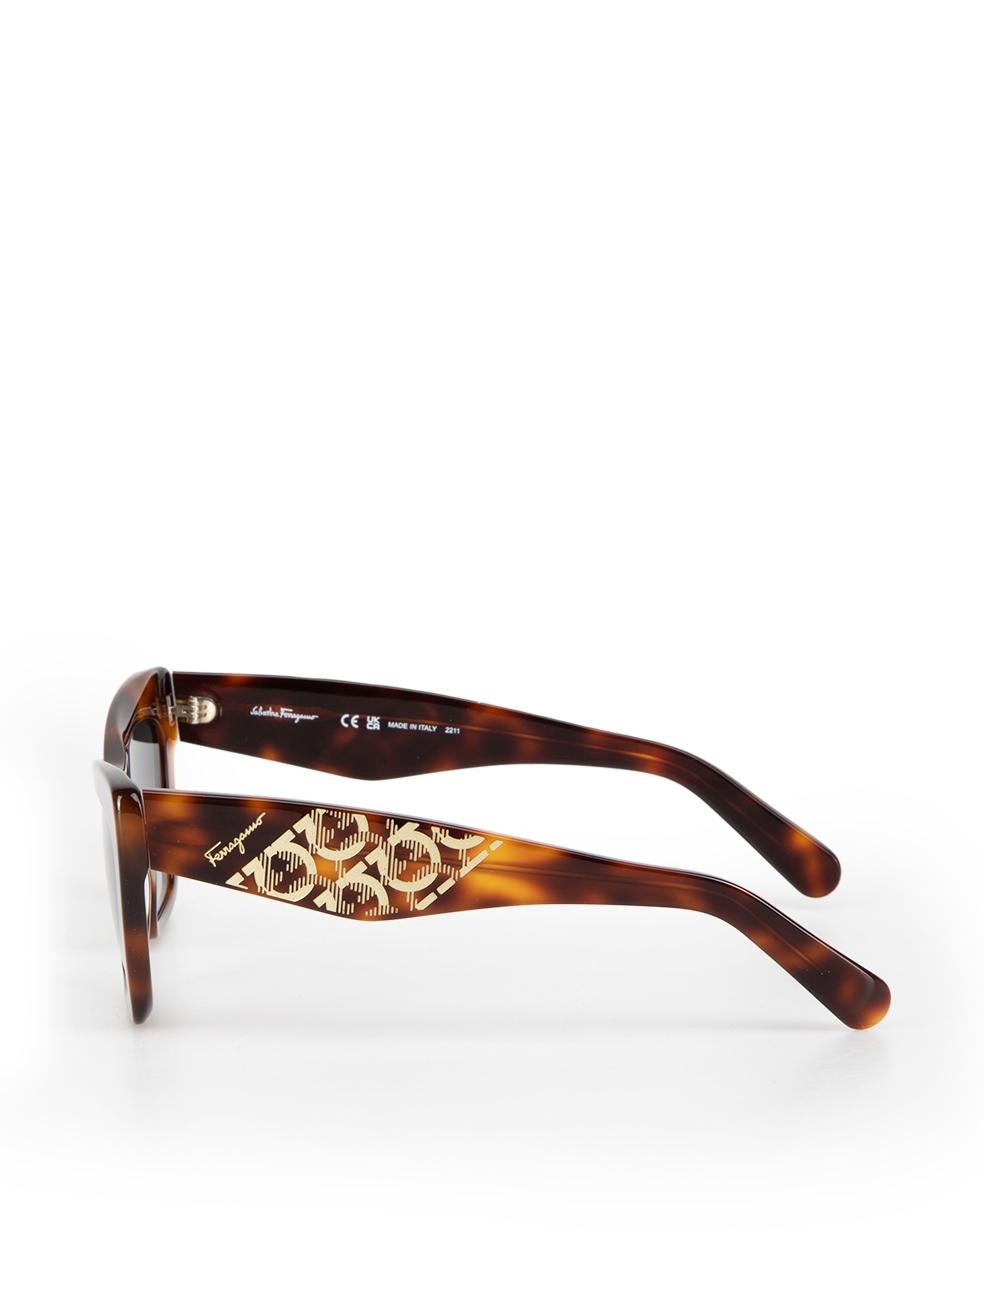 Salvatore Ferragamo Brown Tortoise Cat Eye Sunglasses For Sale 1